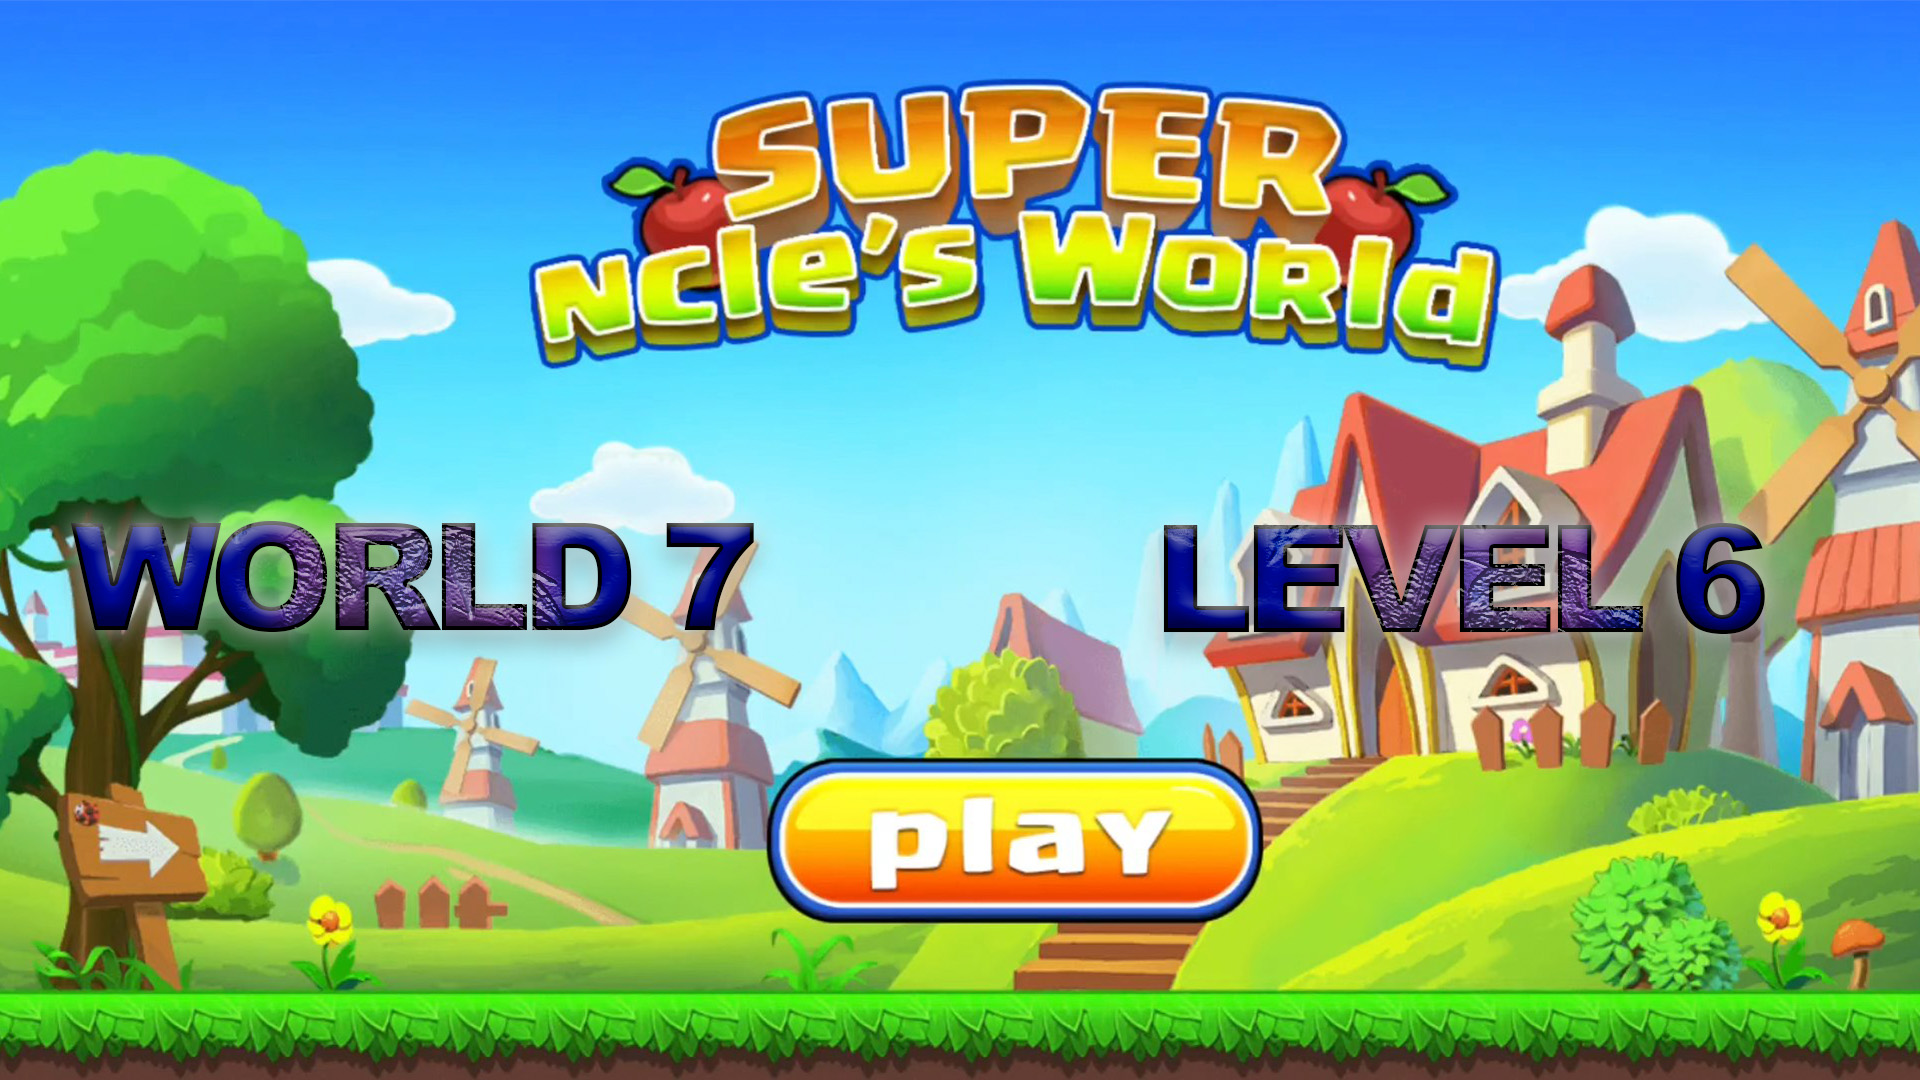 Super ncle's  World 7. Level 6.